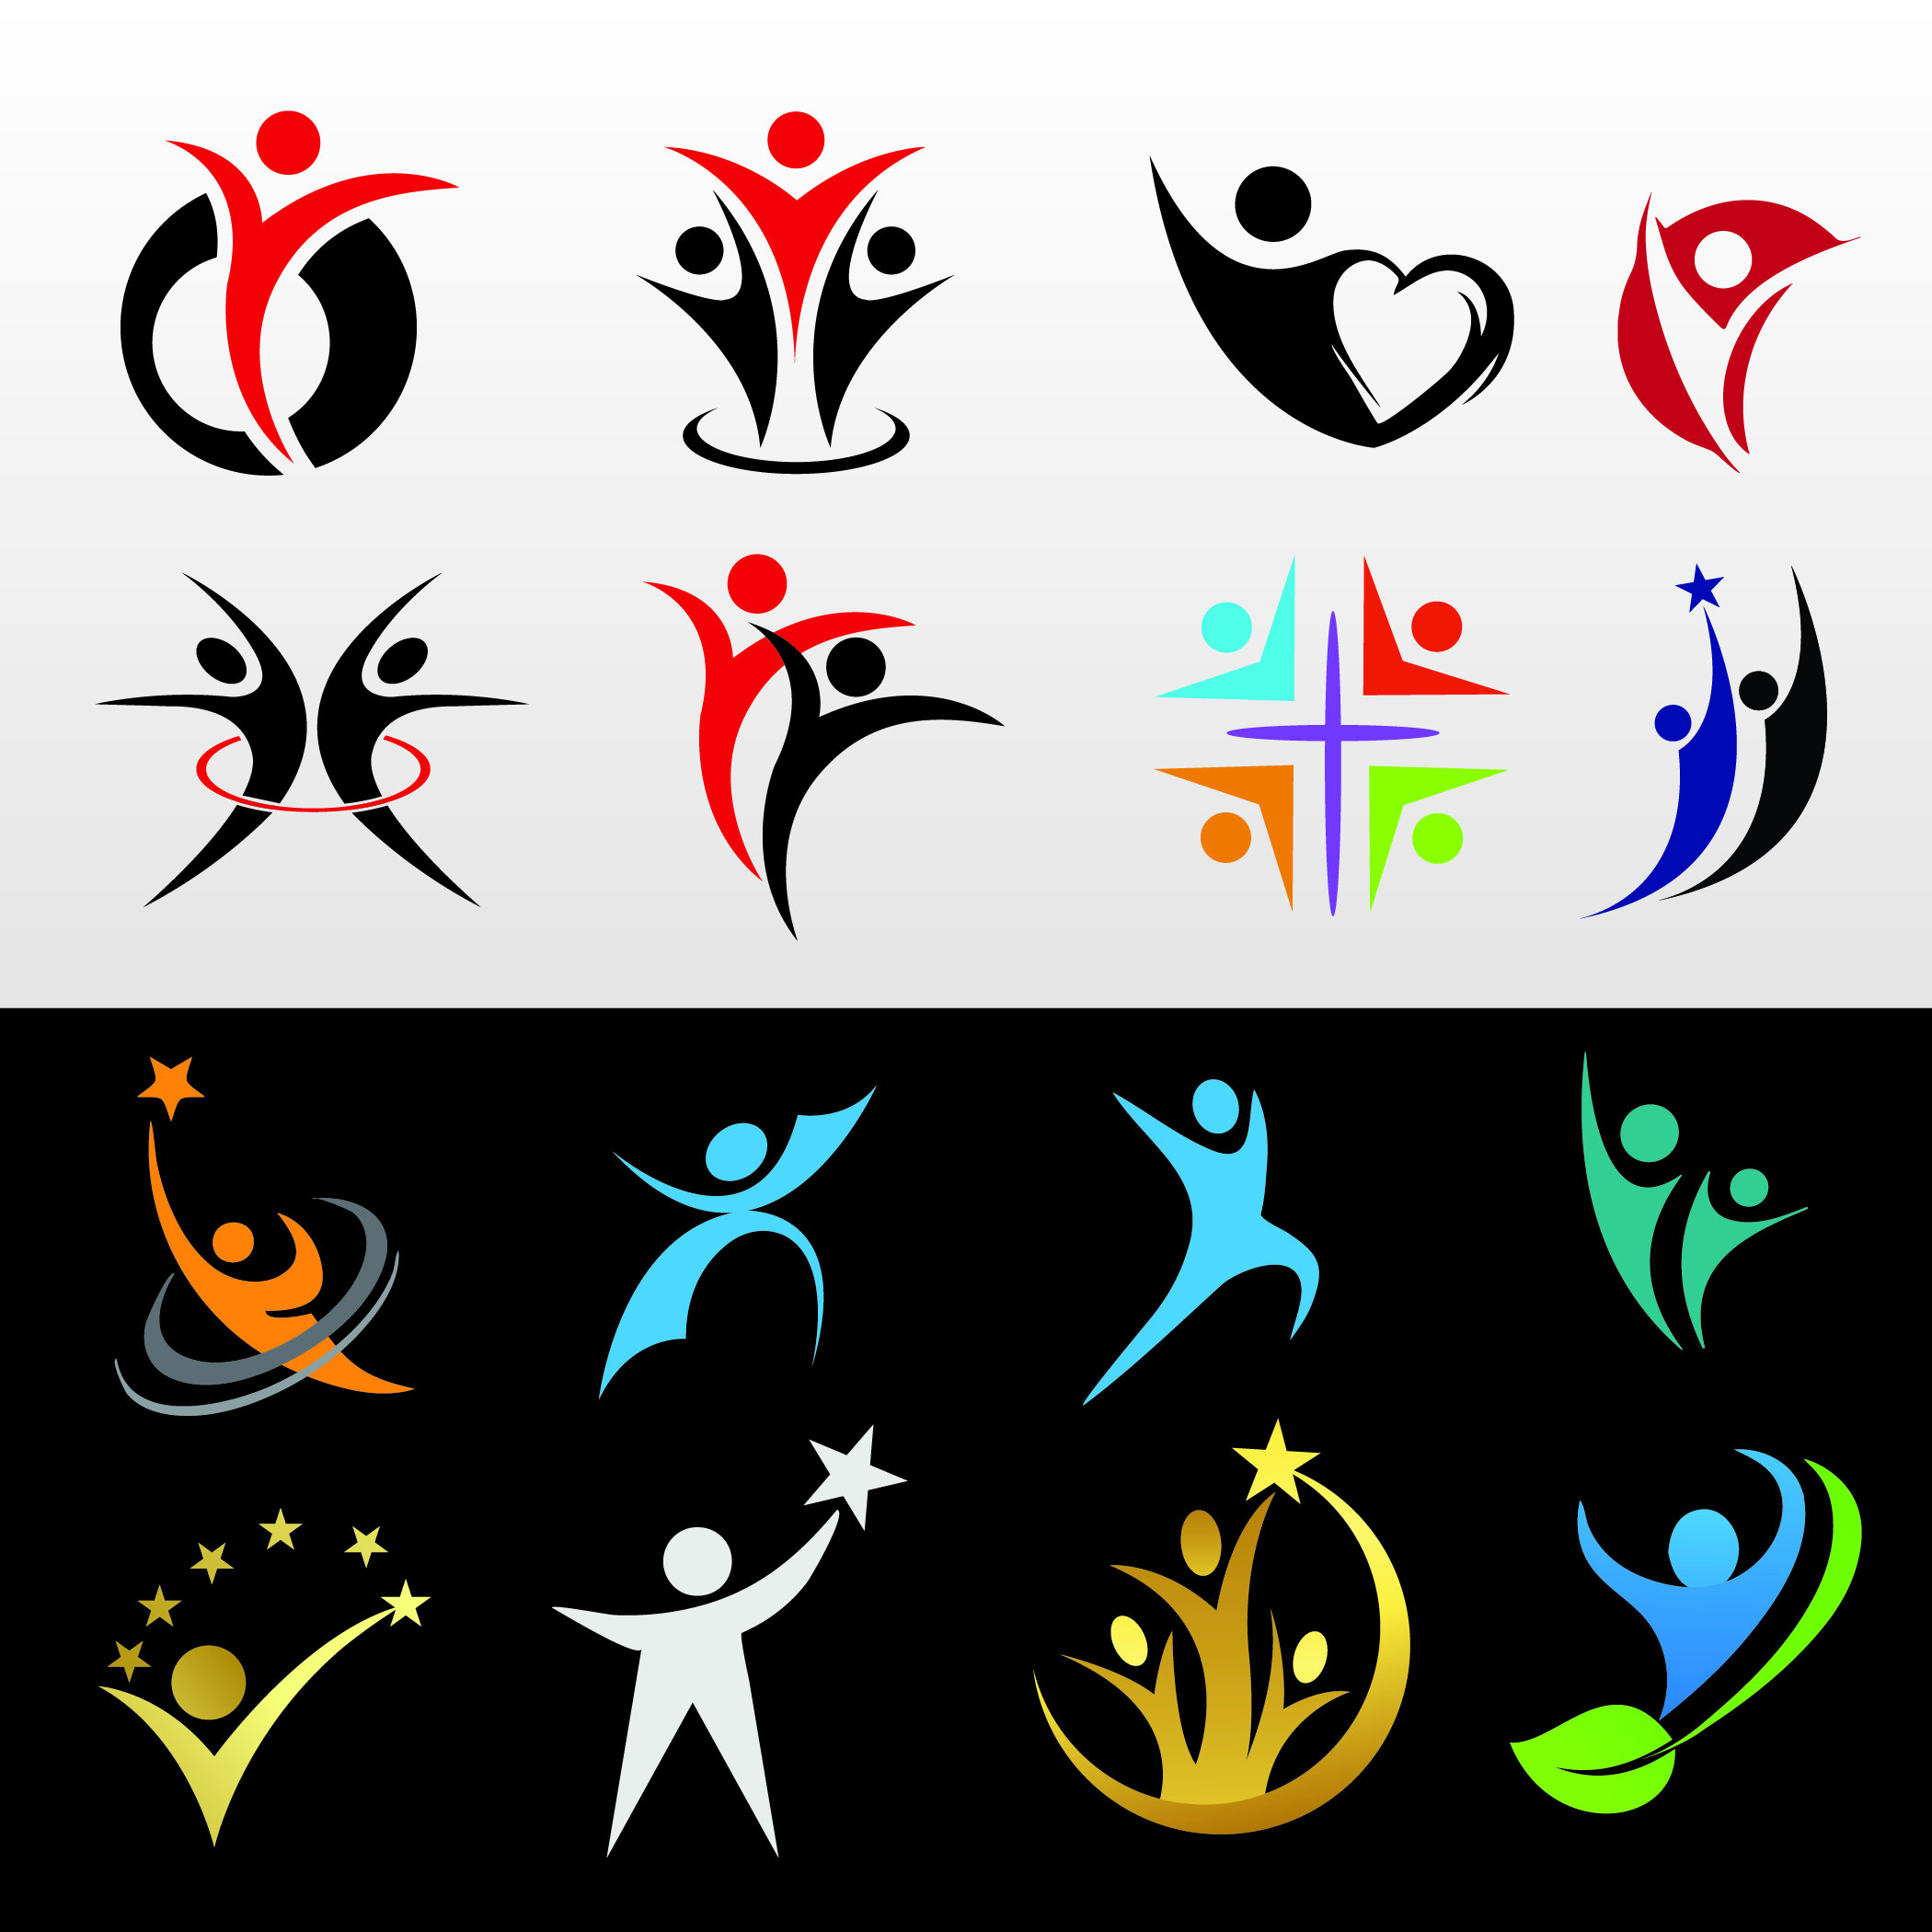 Free People Logo  People logo, Vector logo, Company logo